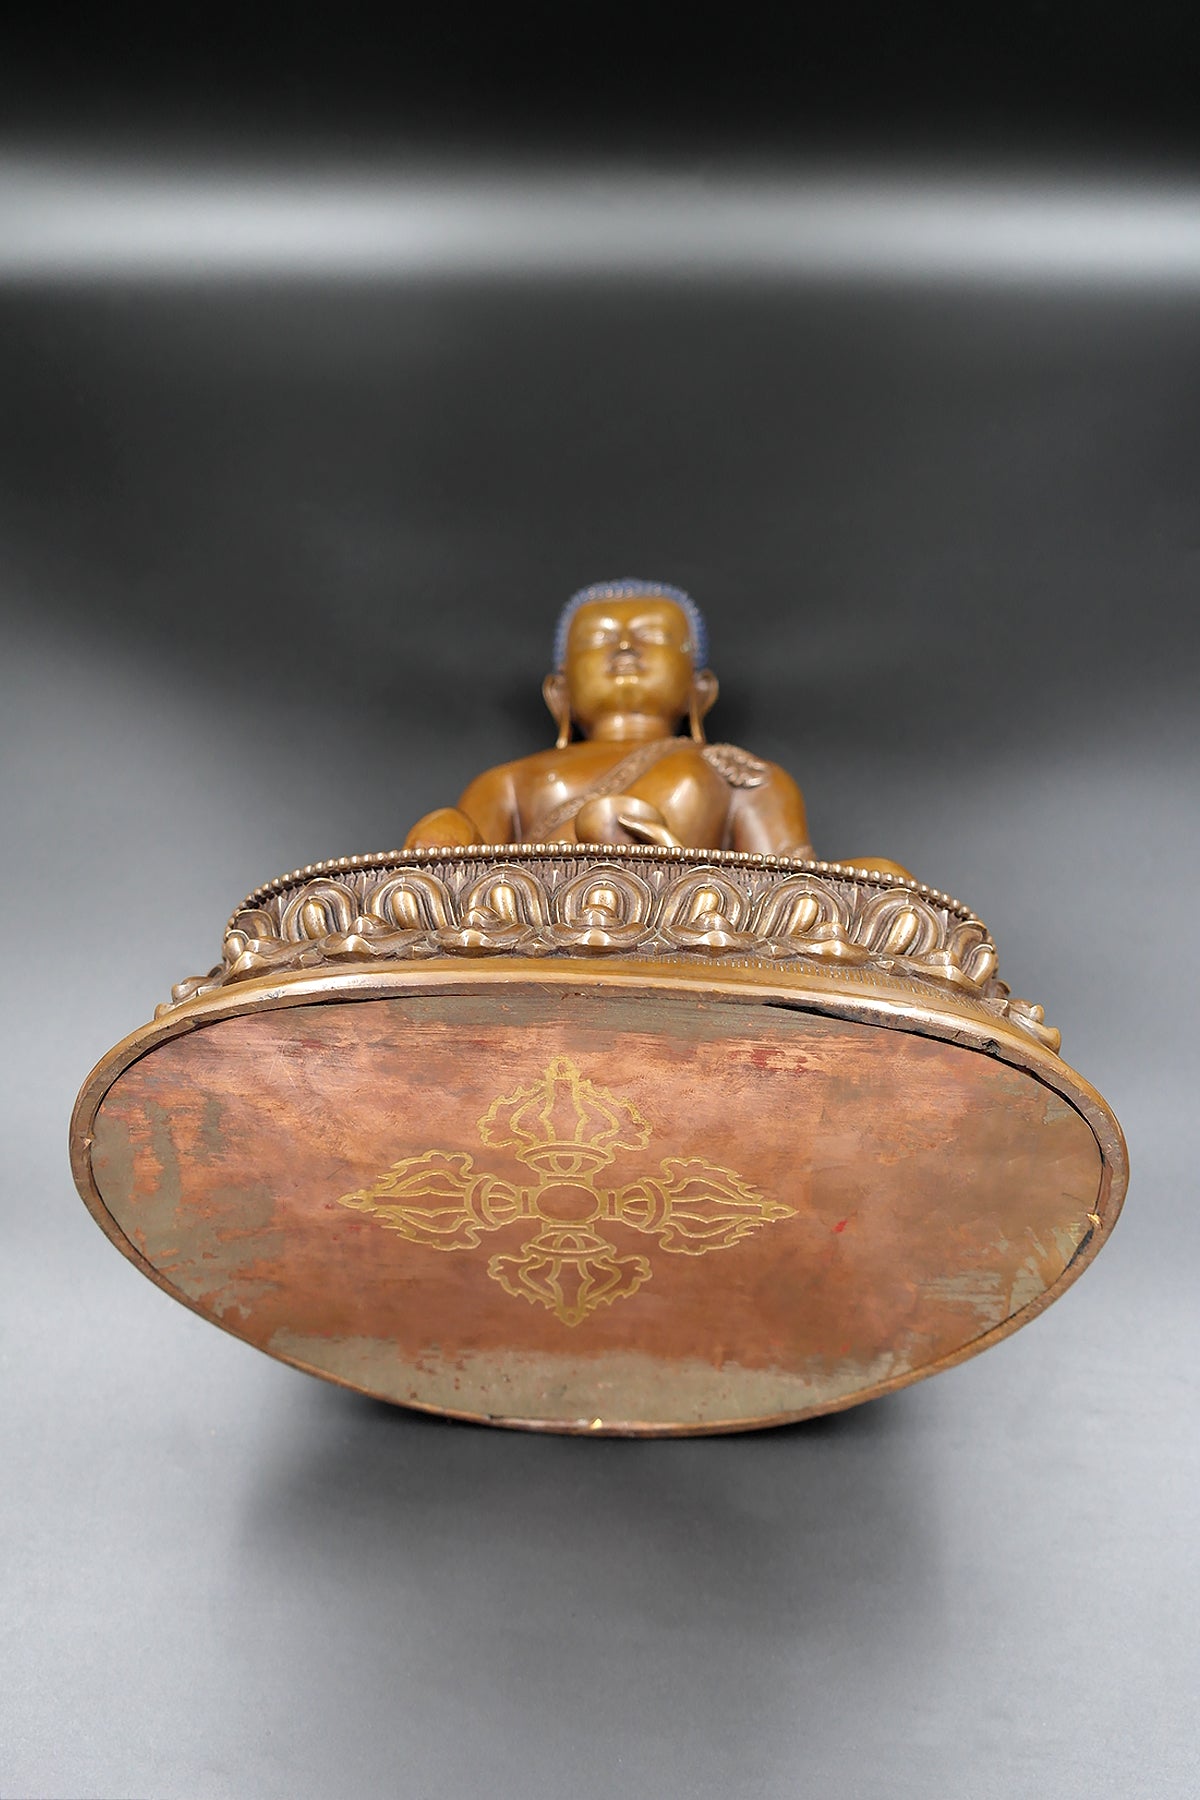 Antiqued Copper Shakyamuni Buddha Statue in double Lotus, 11"